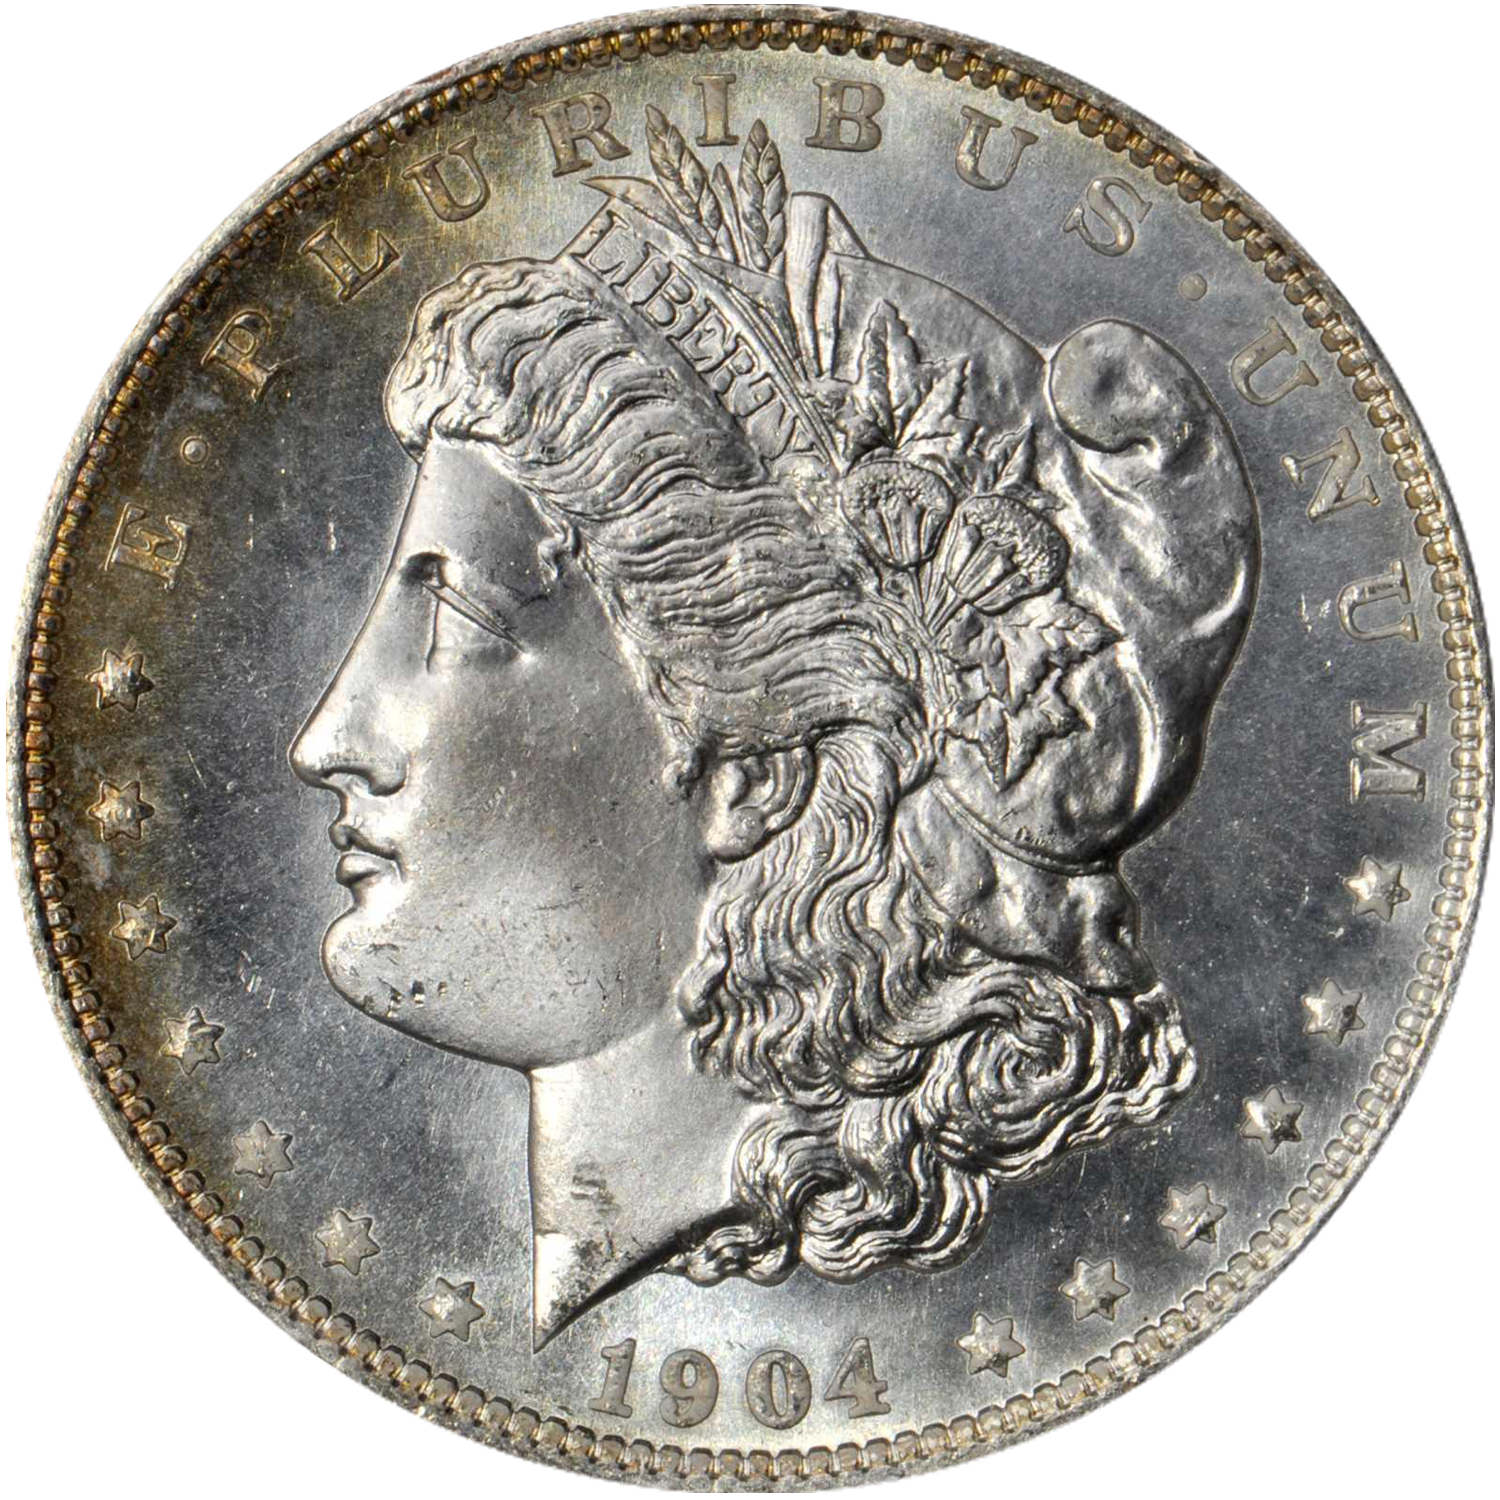 1904 new orleans mint proof morgan silver dollar value